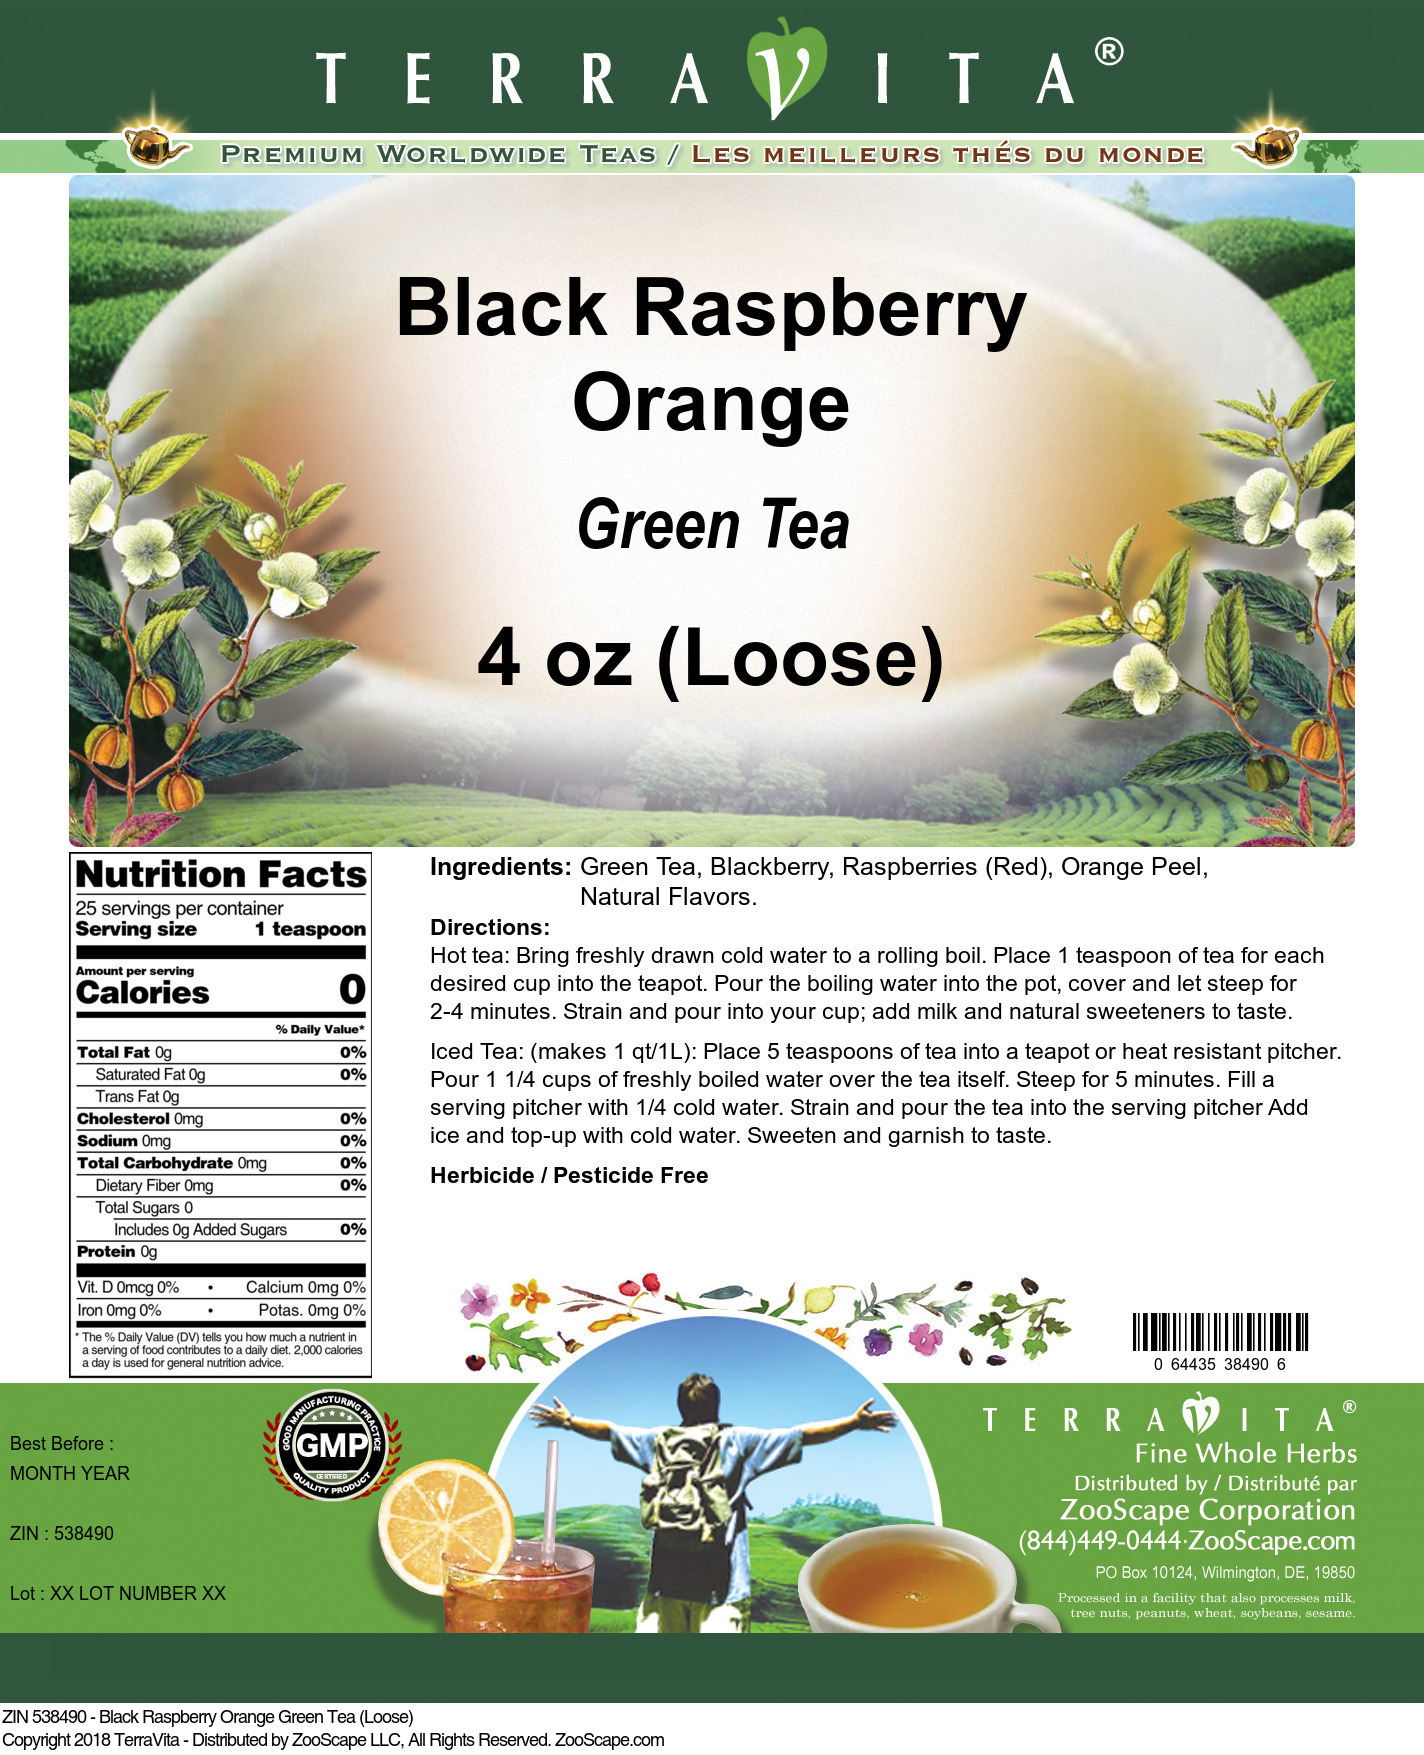 Black Raspberry Orange Green Tea (Loose) - Label